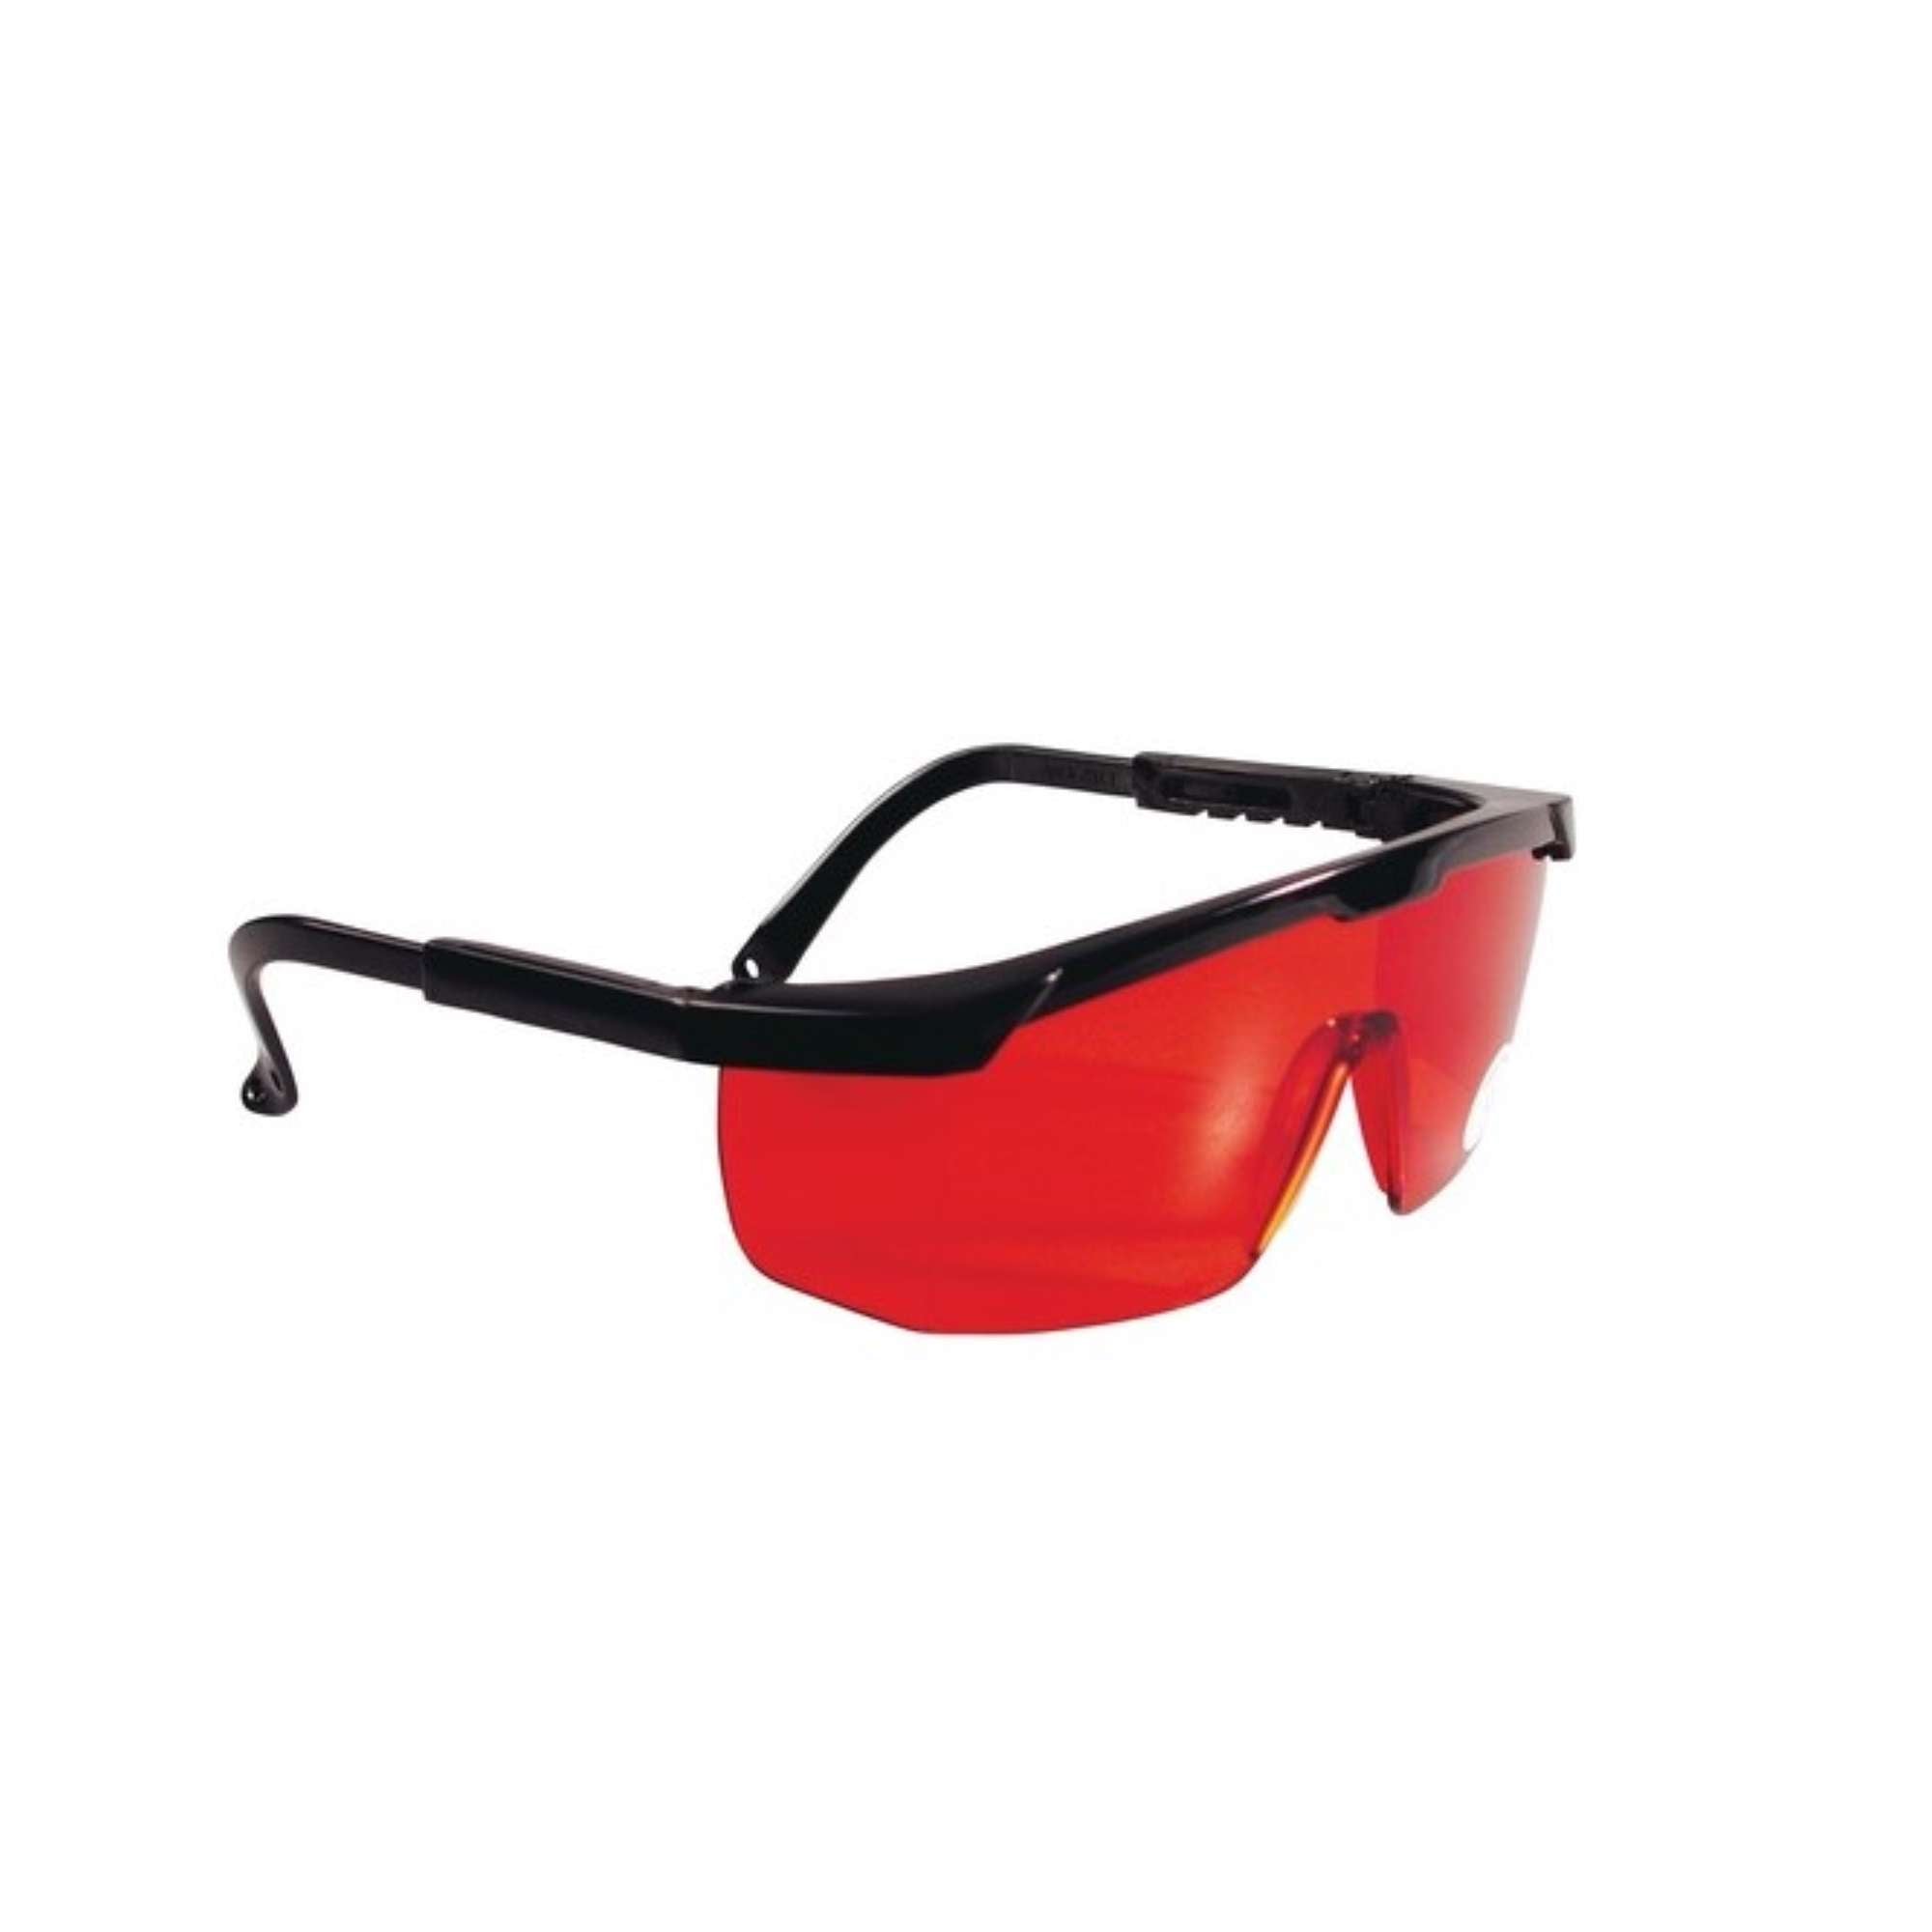 Laser goggles optimise visibility - Stanley GL-1 1-77-171